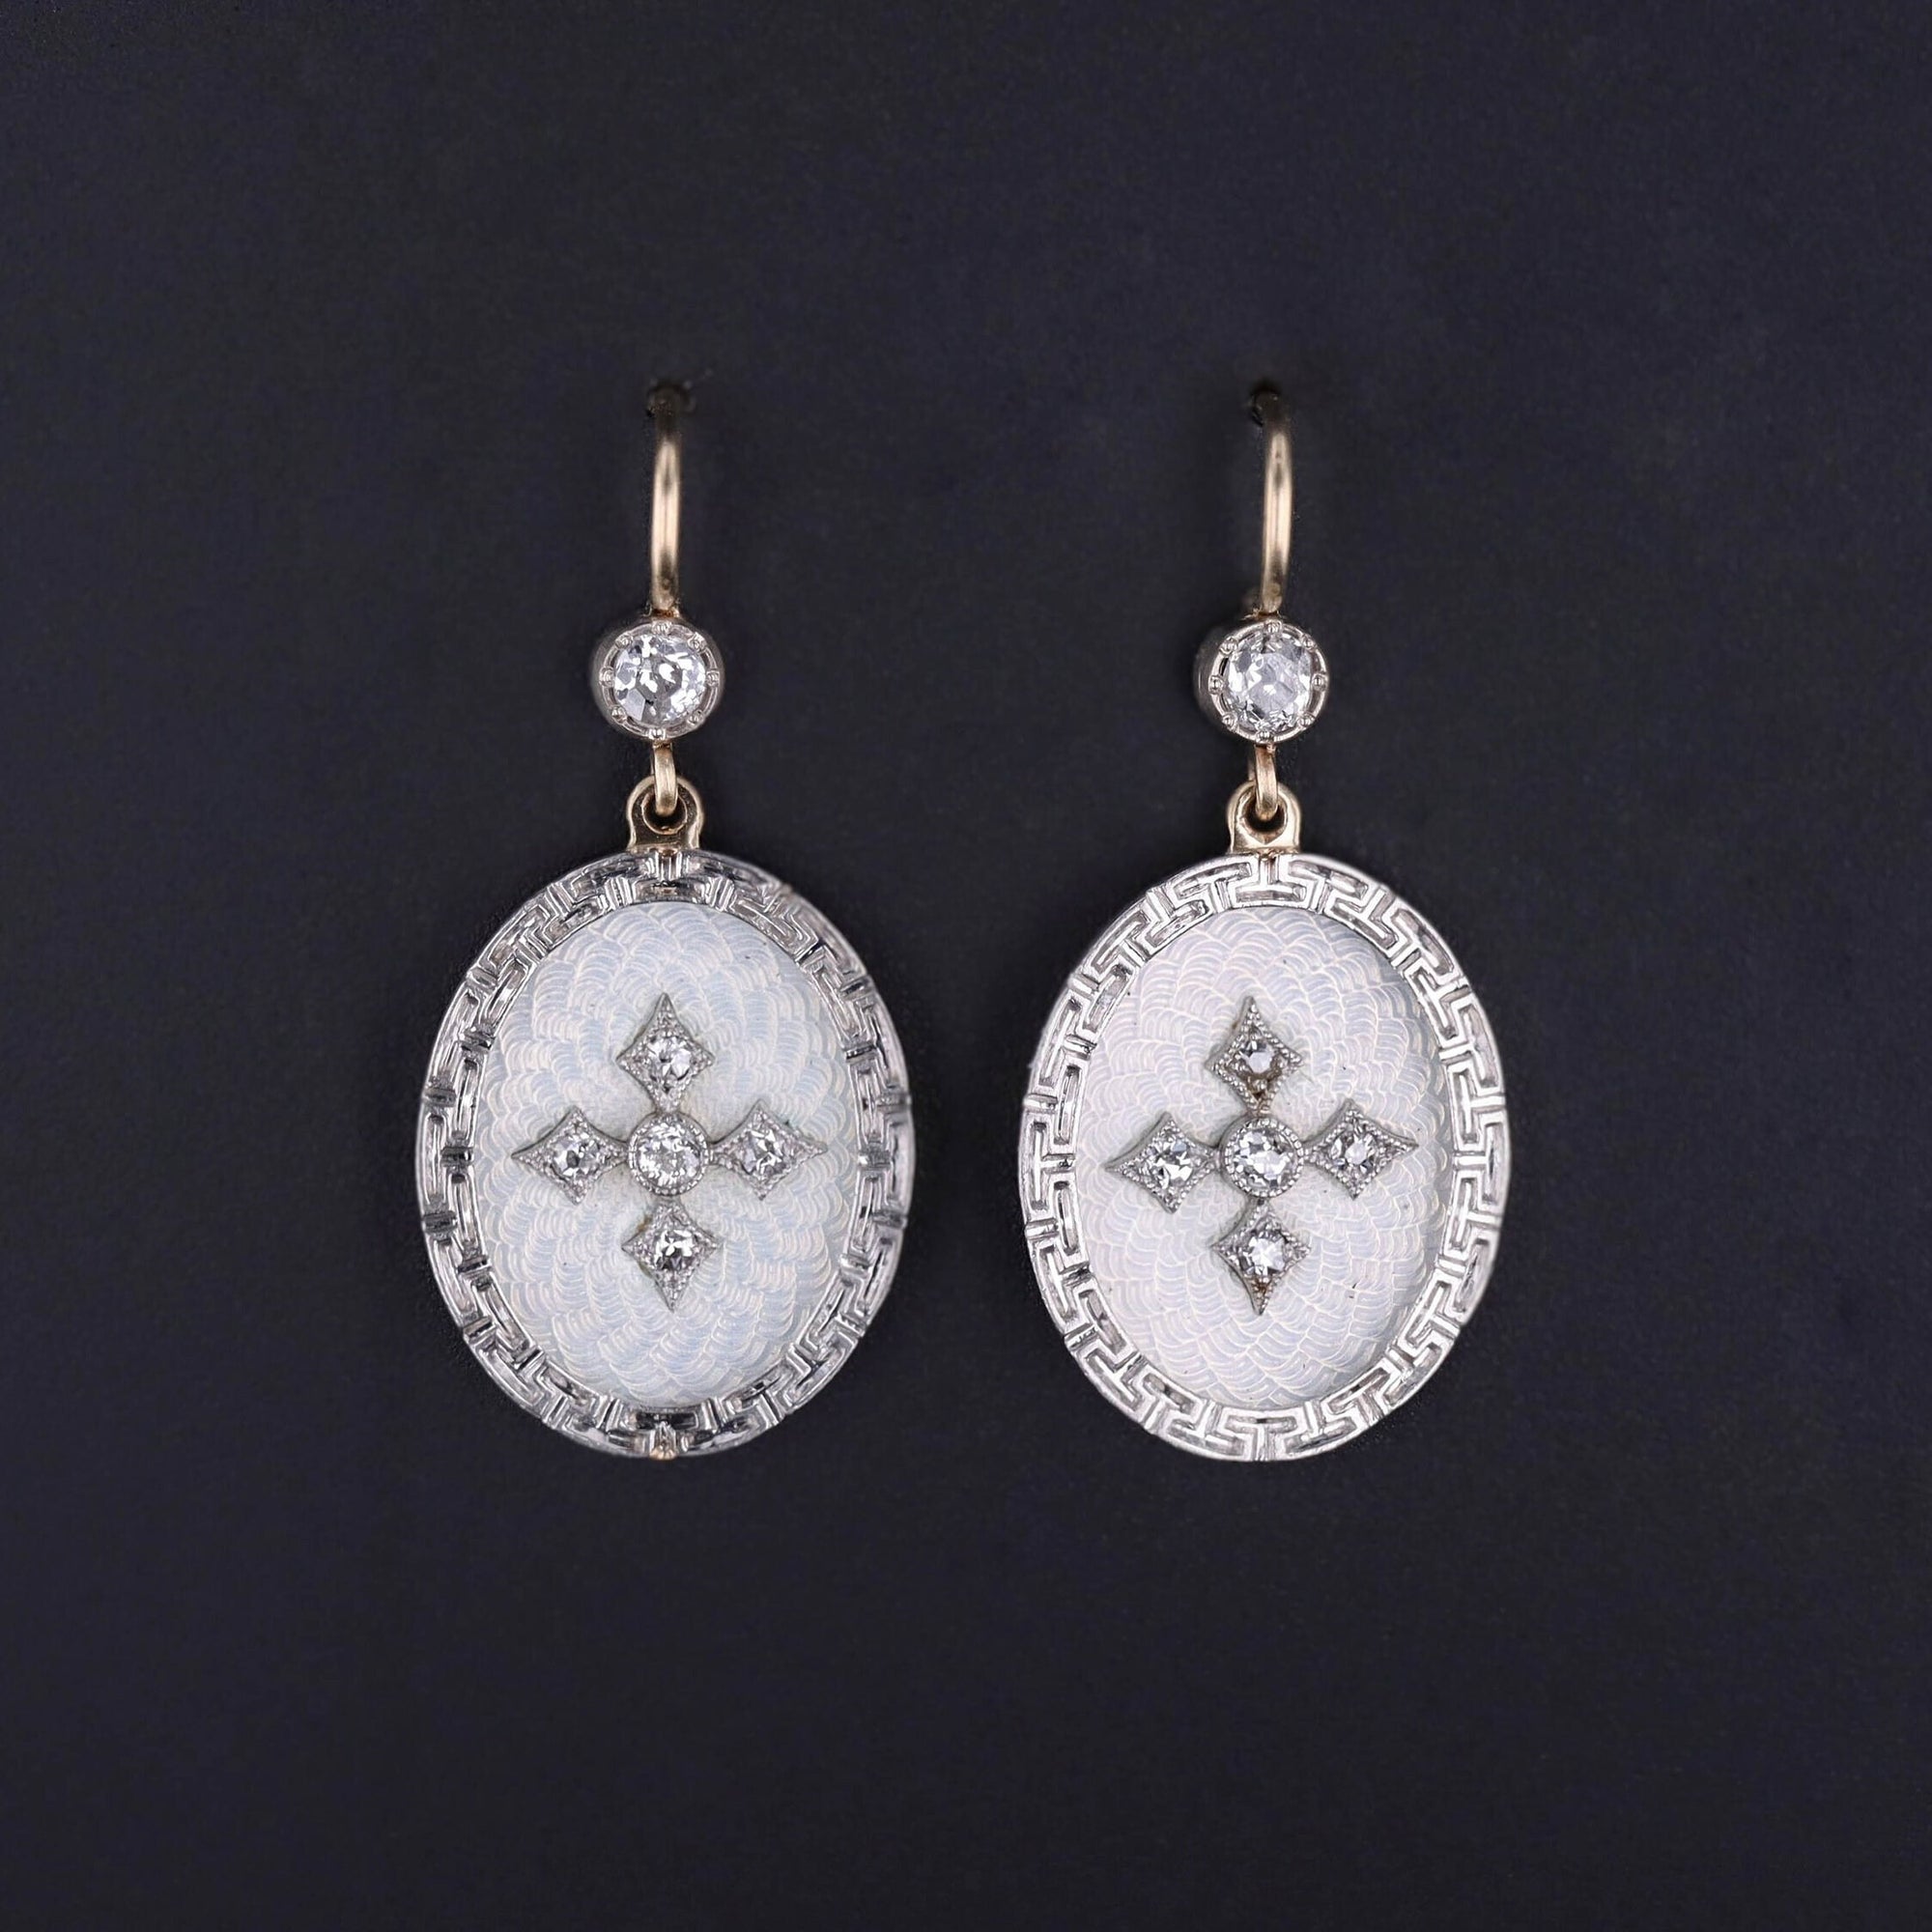 Antique Guilloche Enamel and Diamond Conversion Earrings